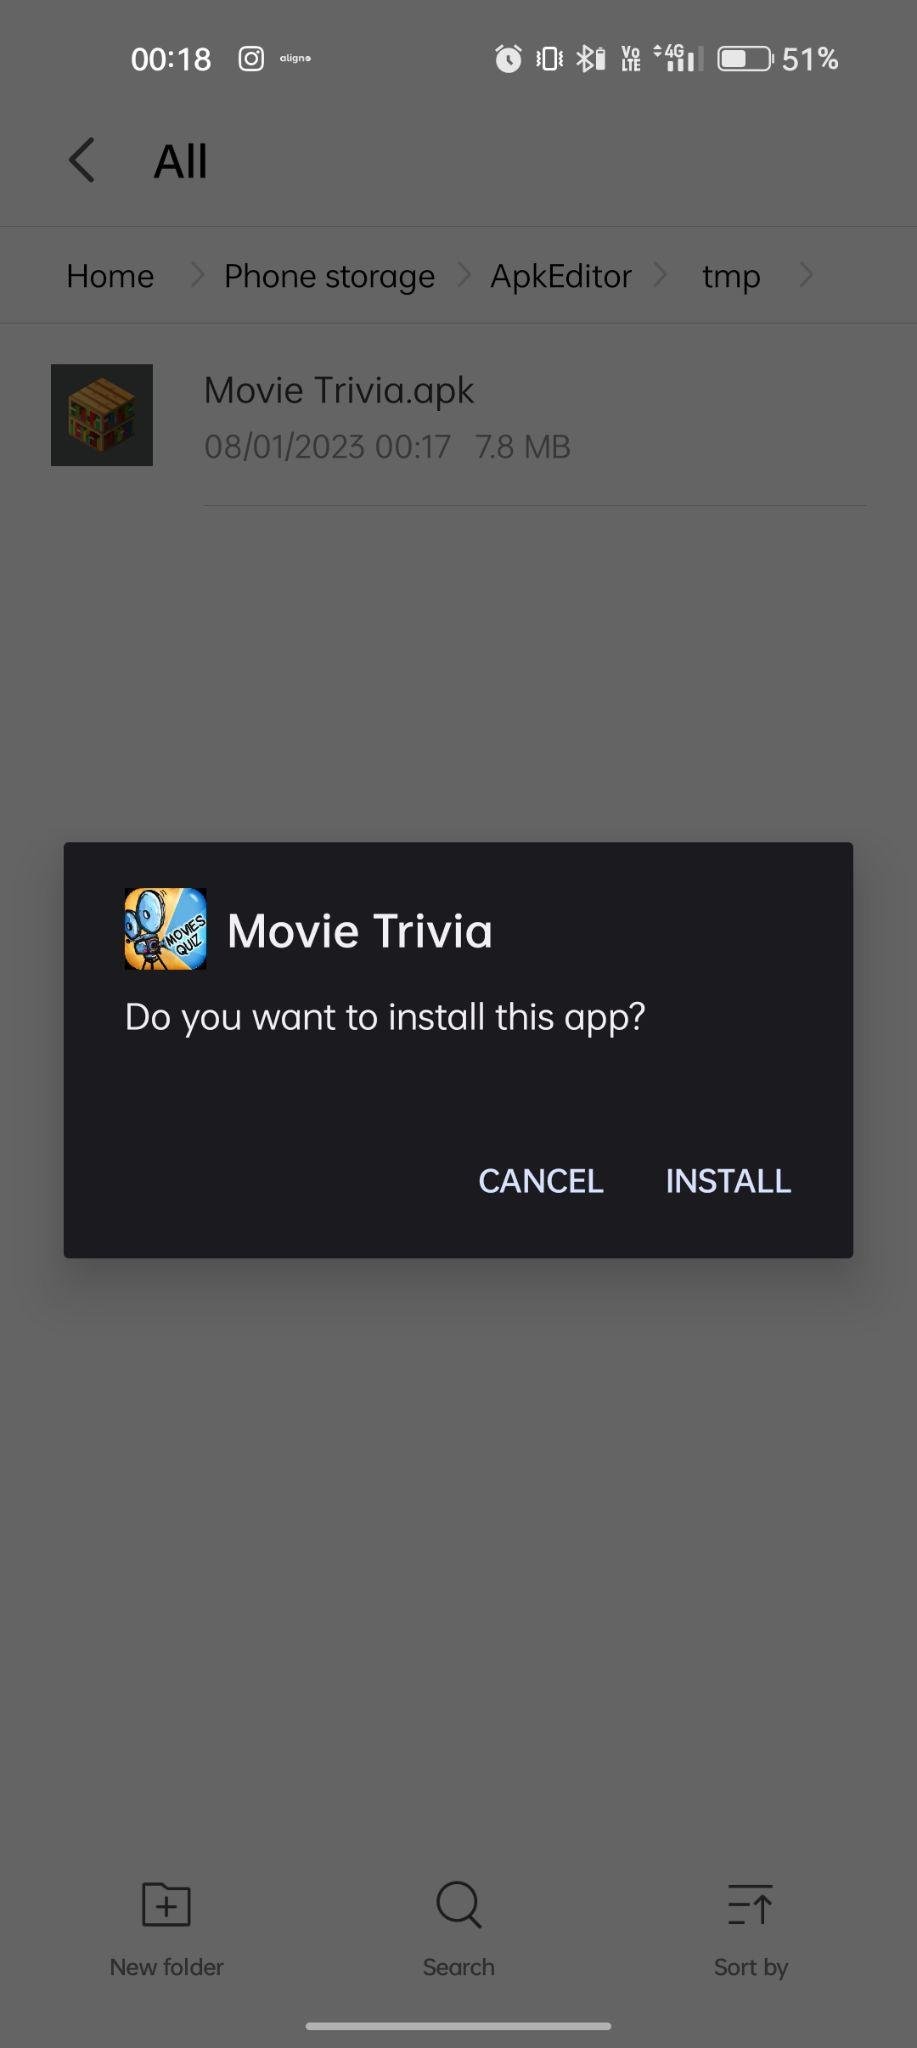 Movie Trivia apk installed